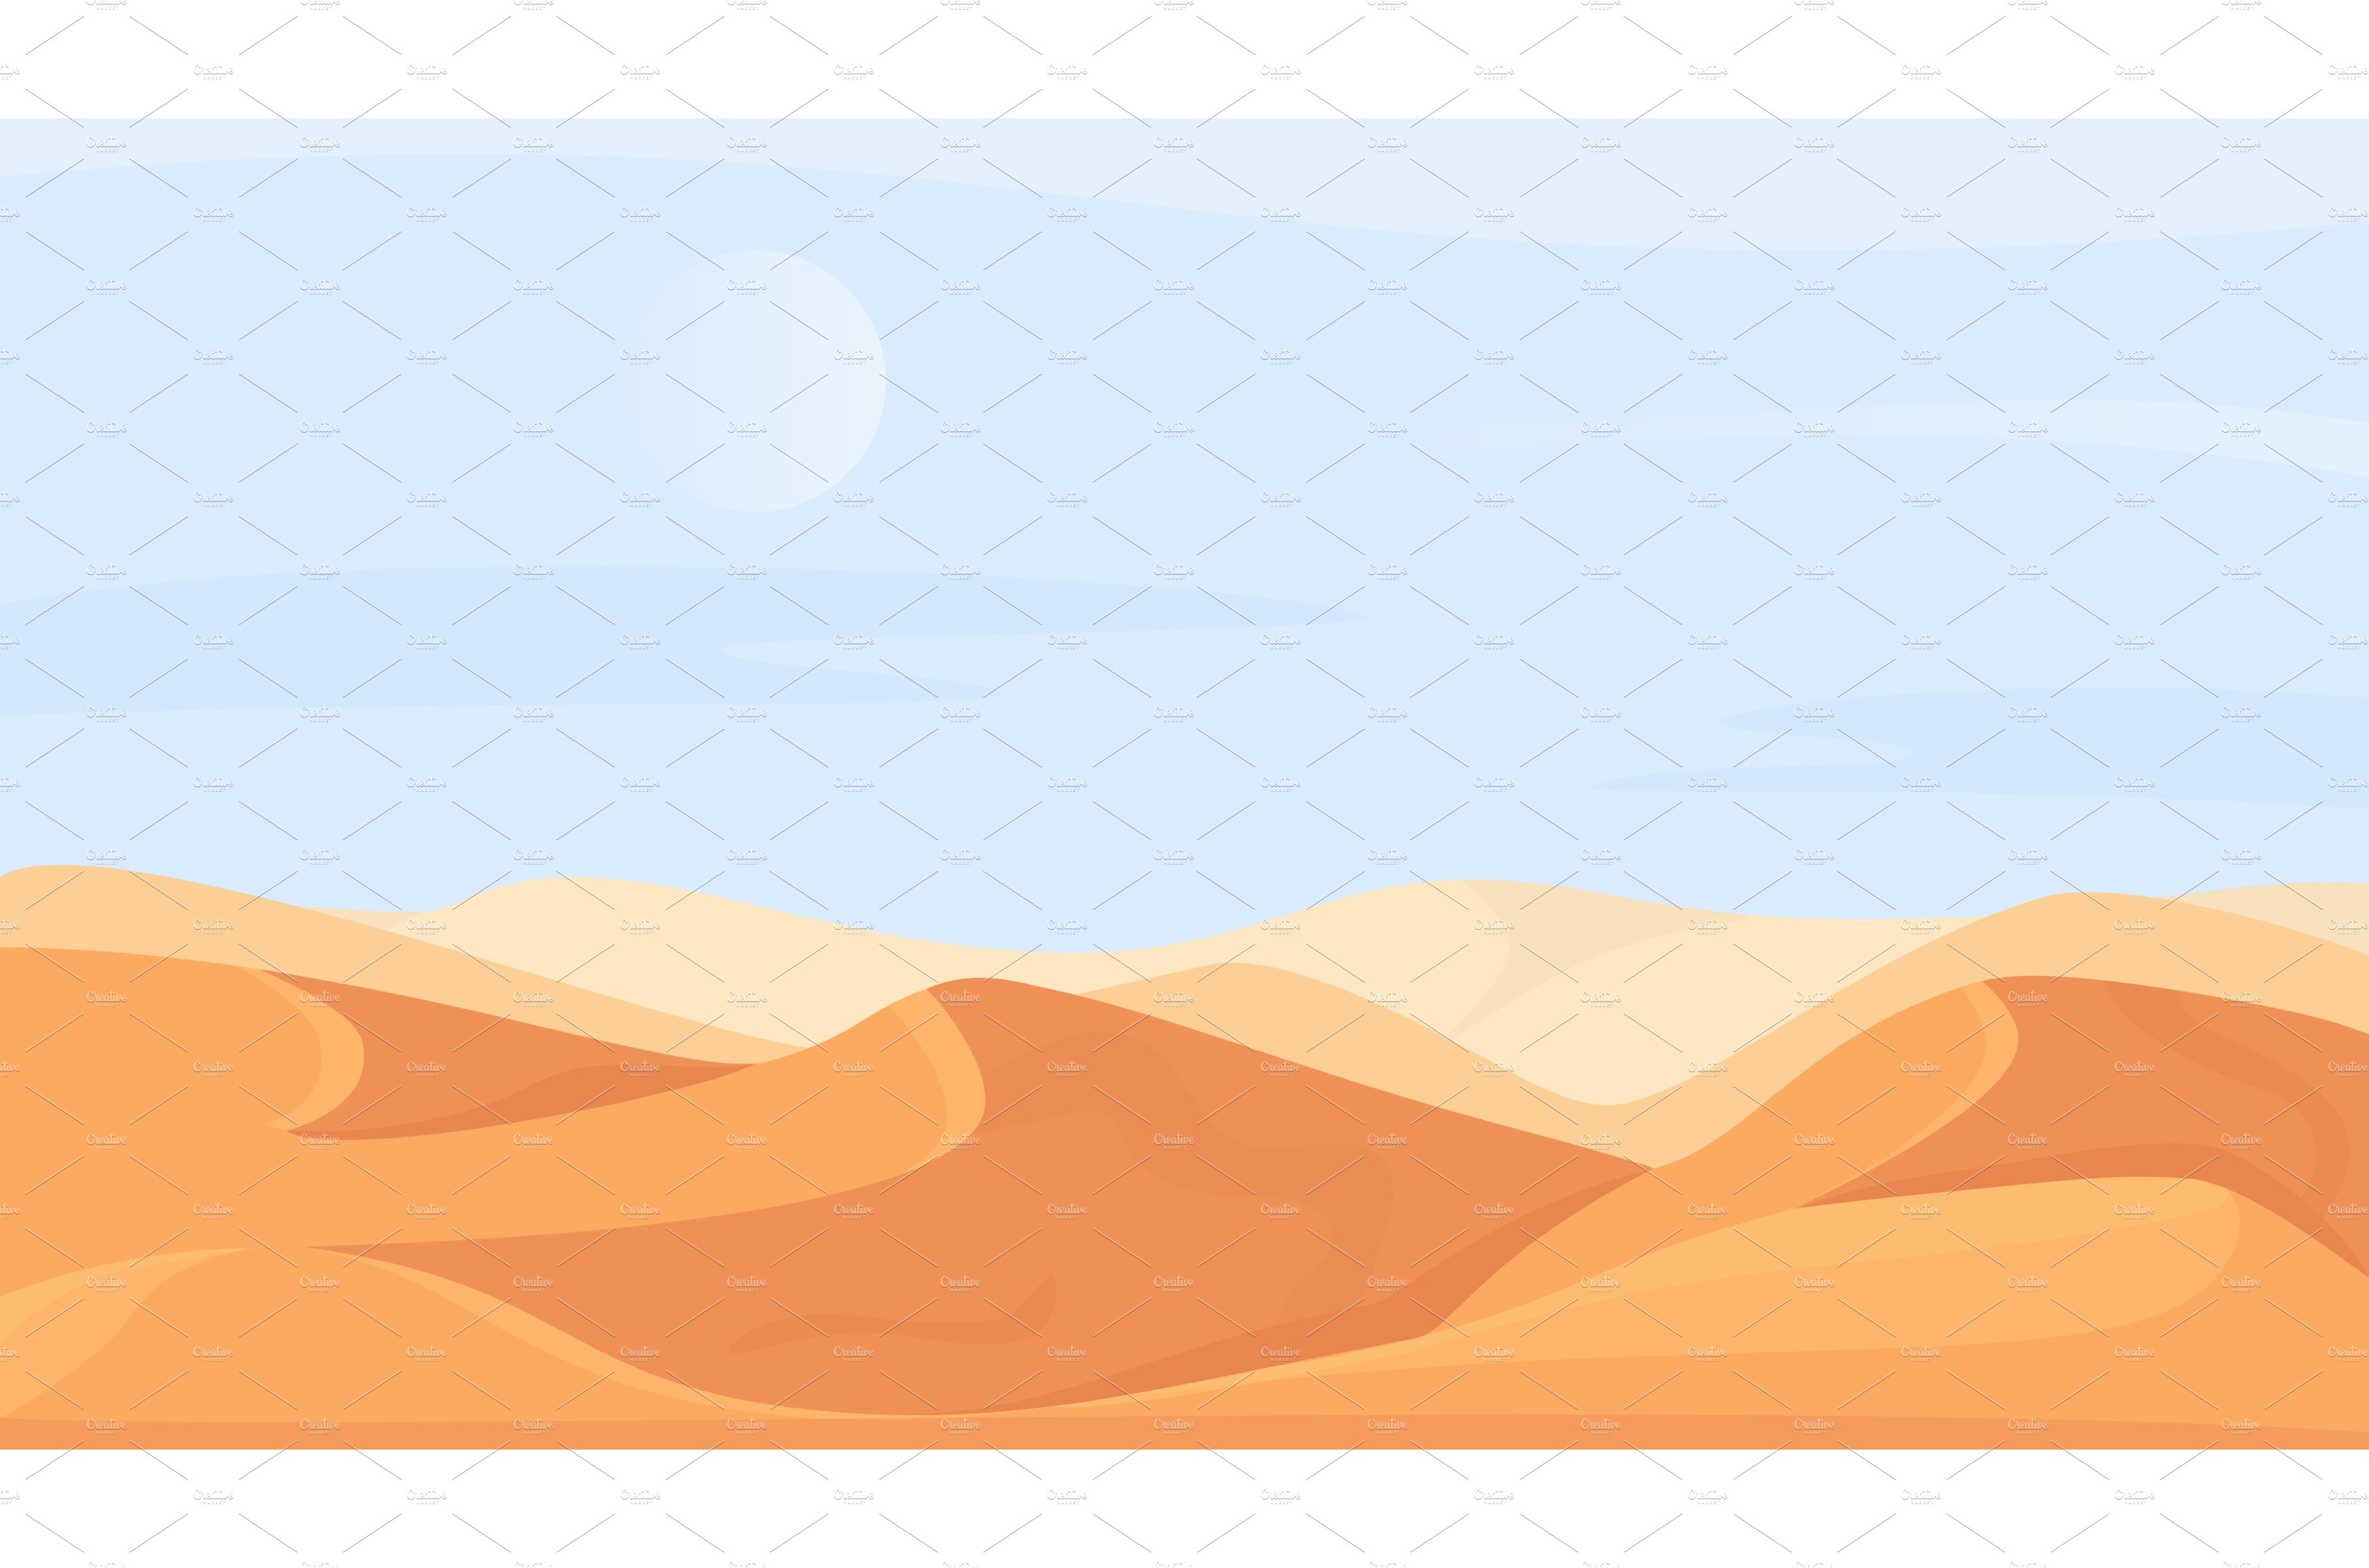 Desert nature landscape cover image.